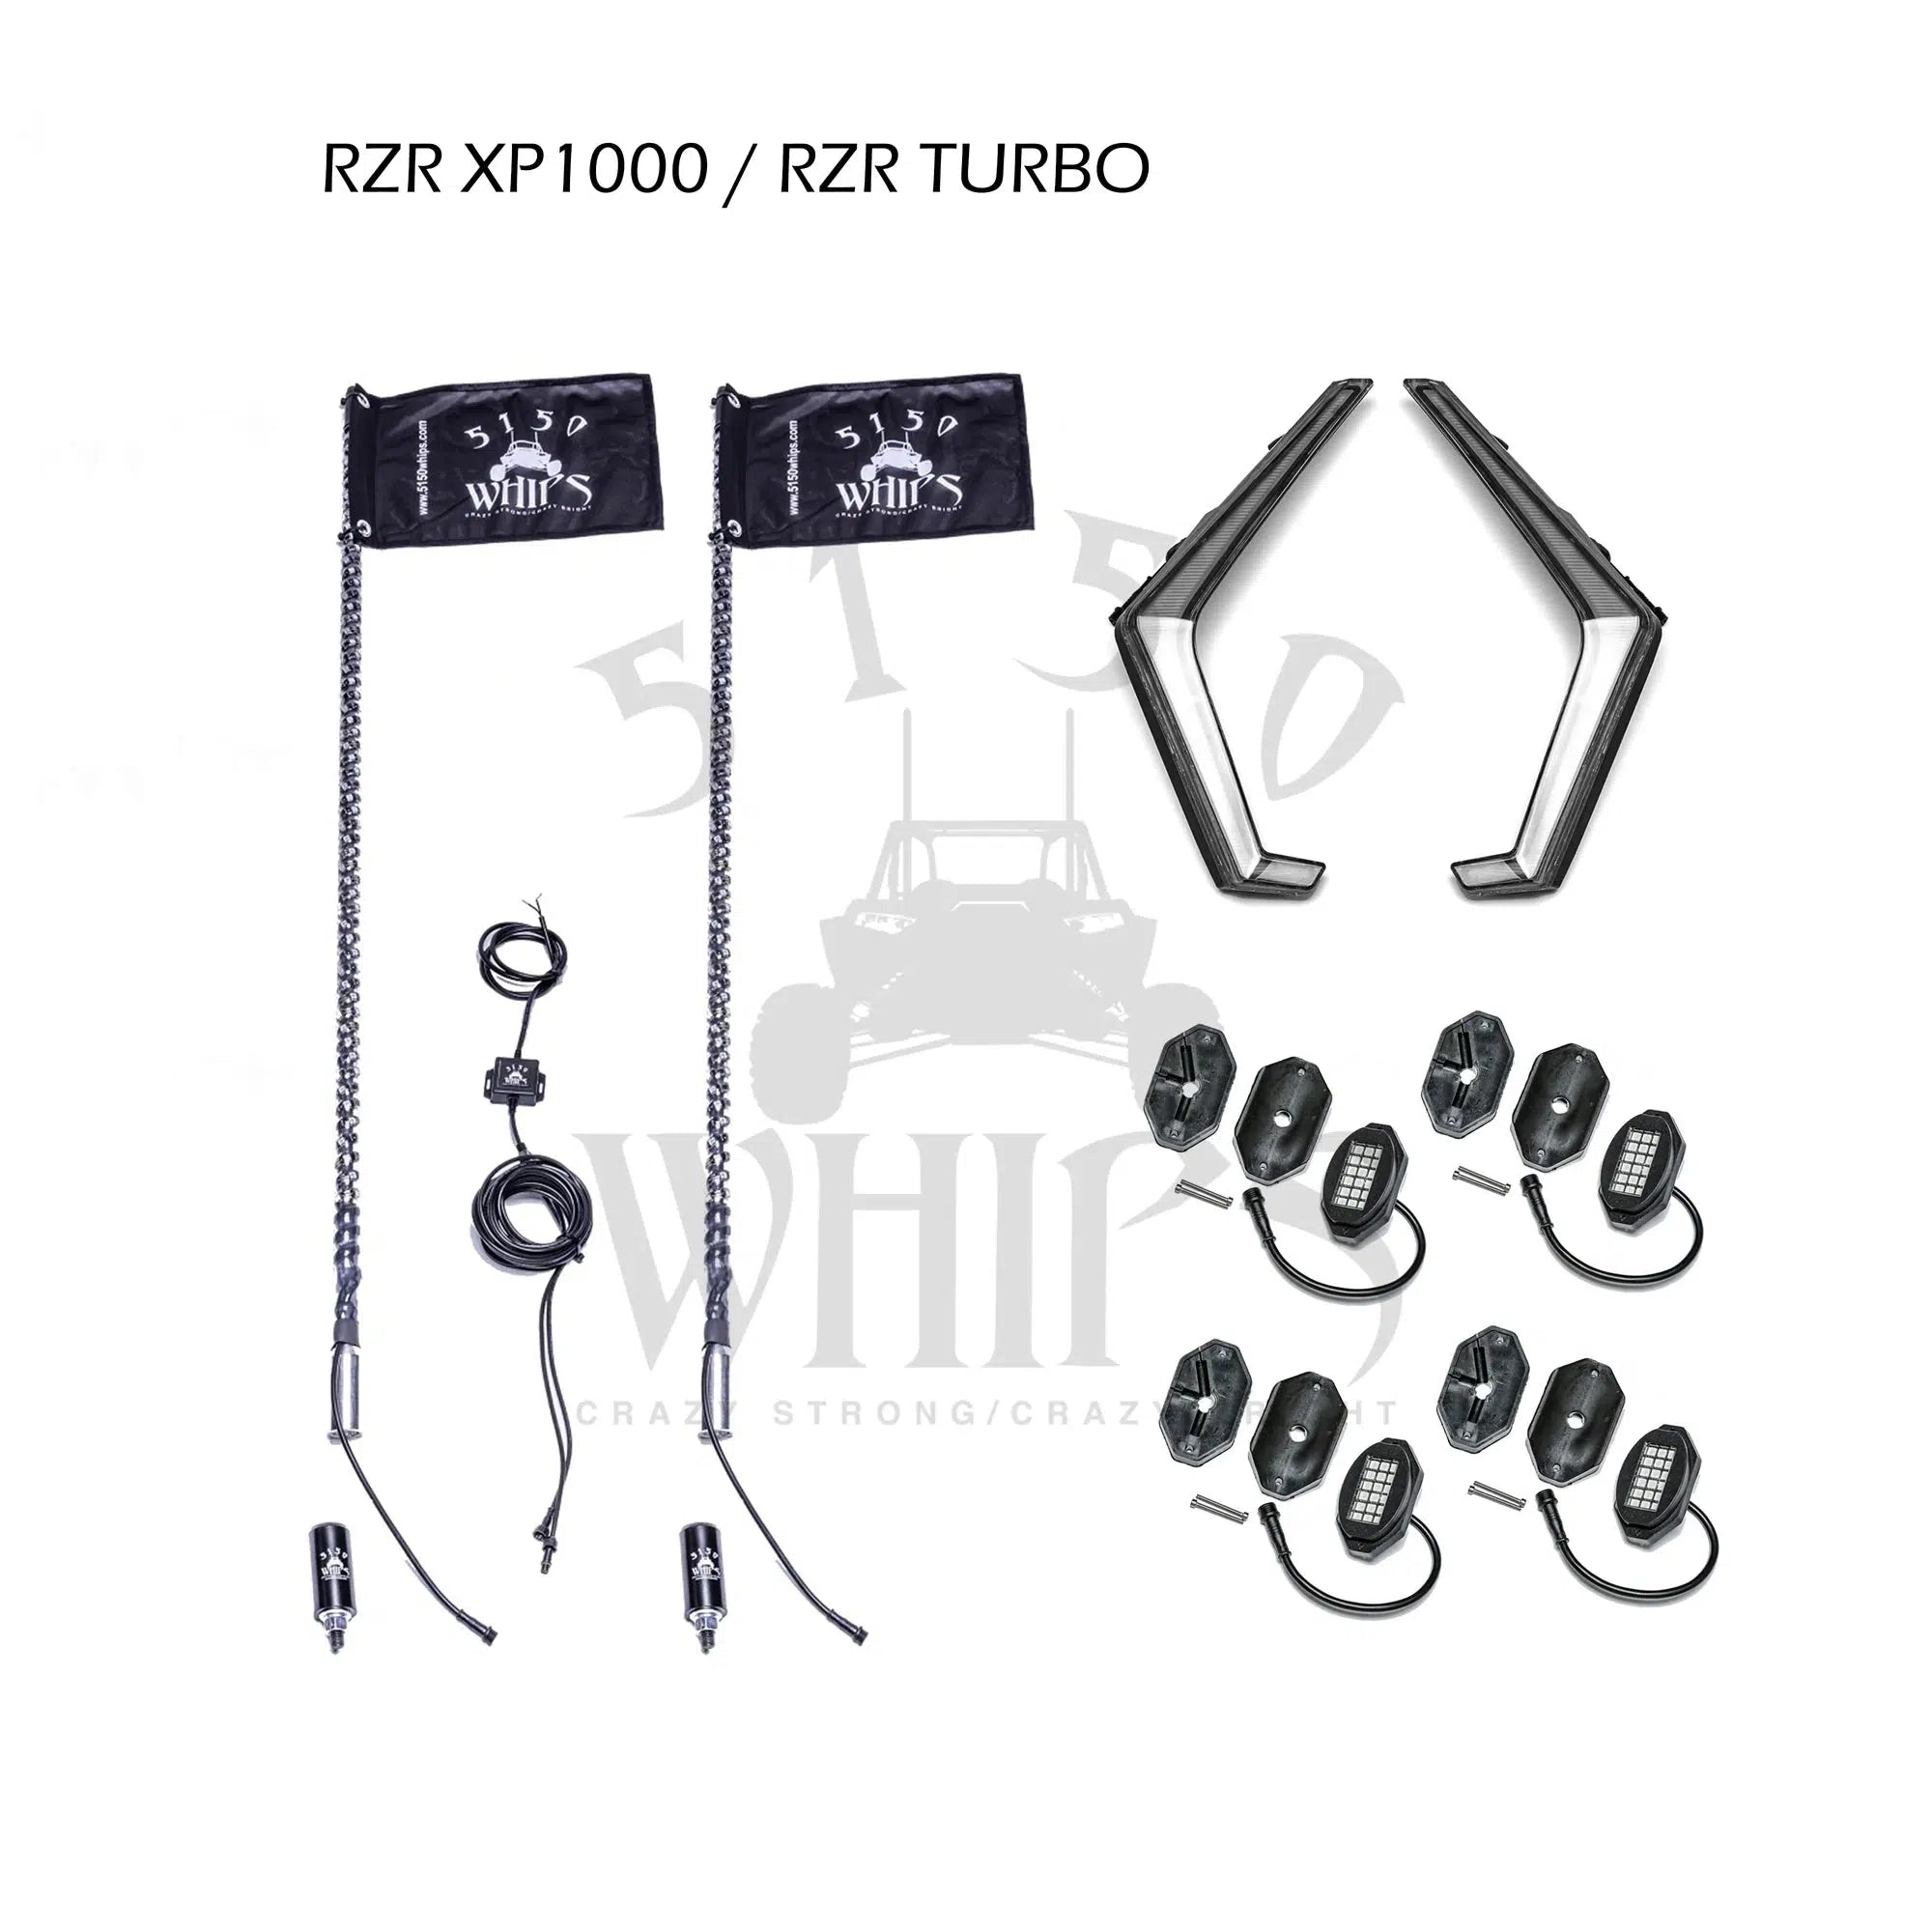 PALARIS RZR XP 1000 / TURBO LIGHTING KIT-Whip Flags-5150 Whips-Black Market UTV